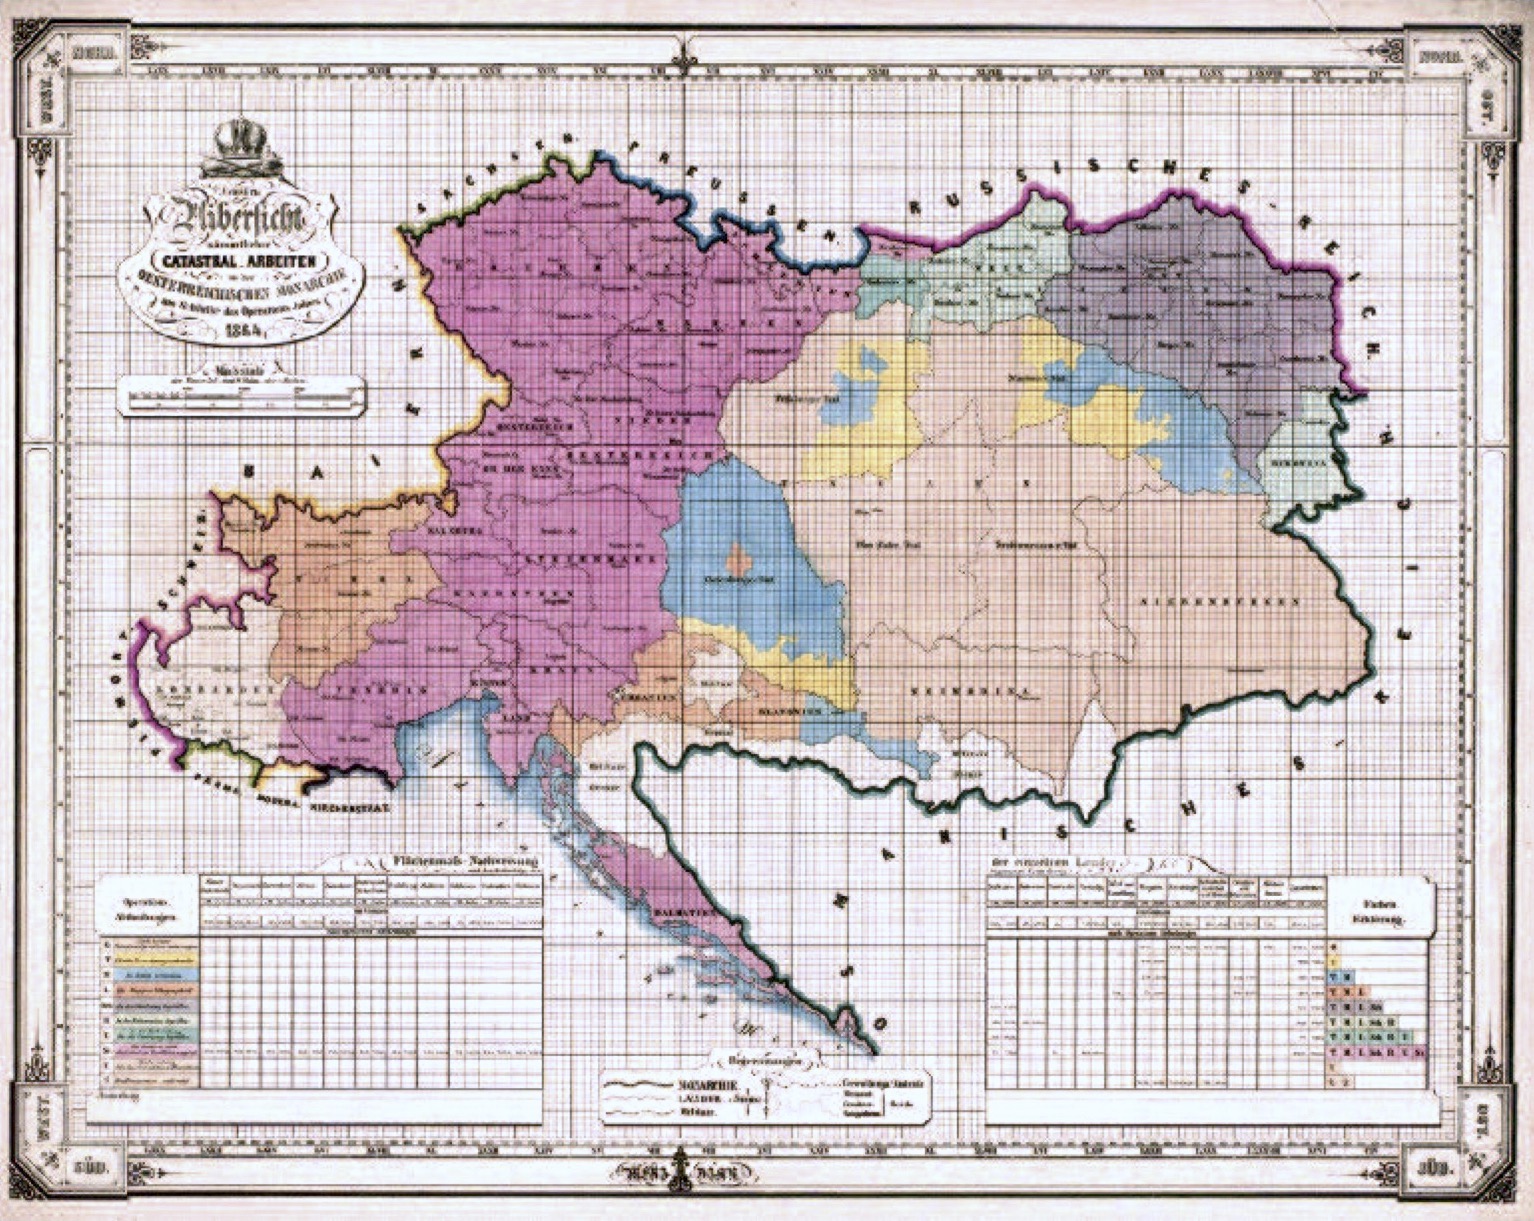 Tarnobrzeg 1853 cadastral map